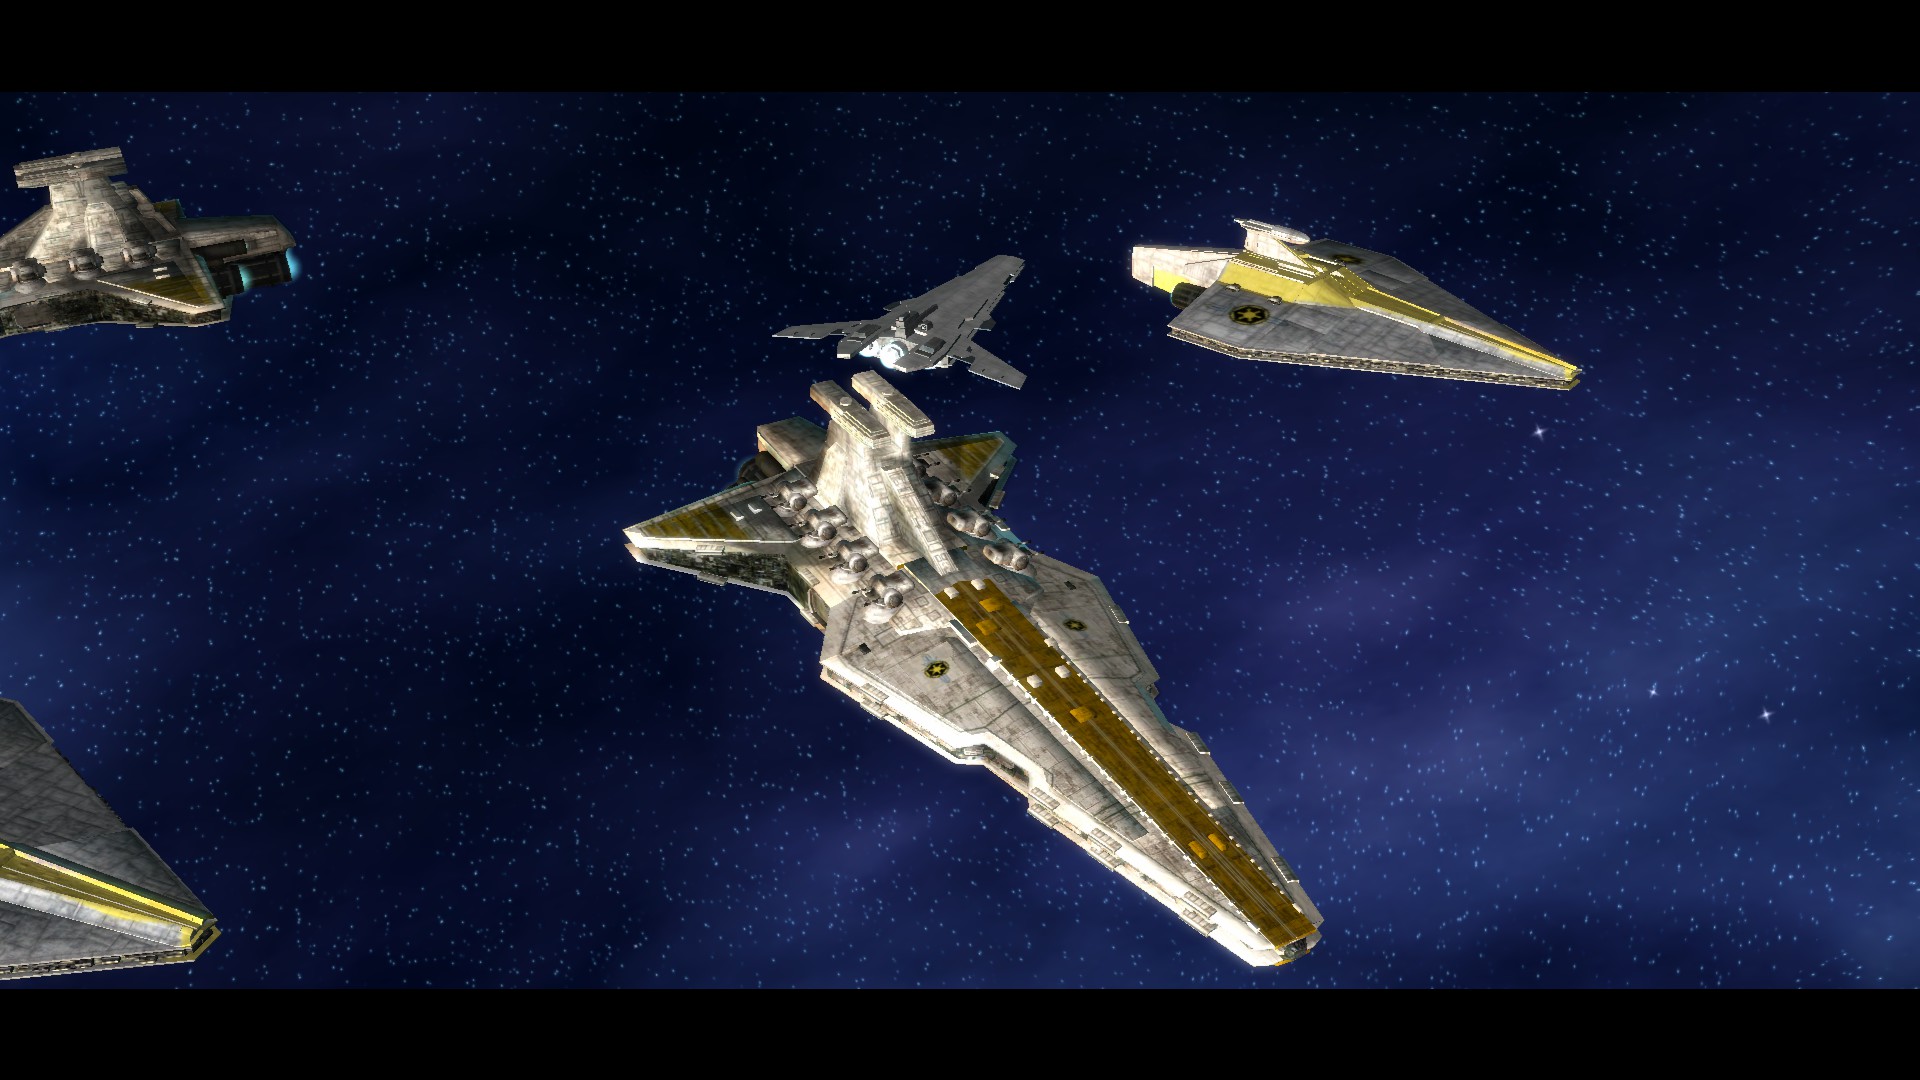 star wars empire at war clone wars mod launch opttion